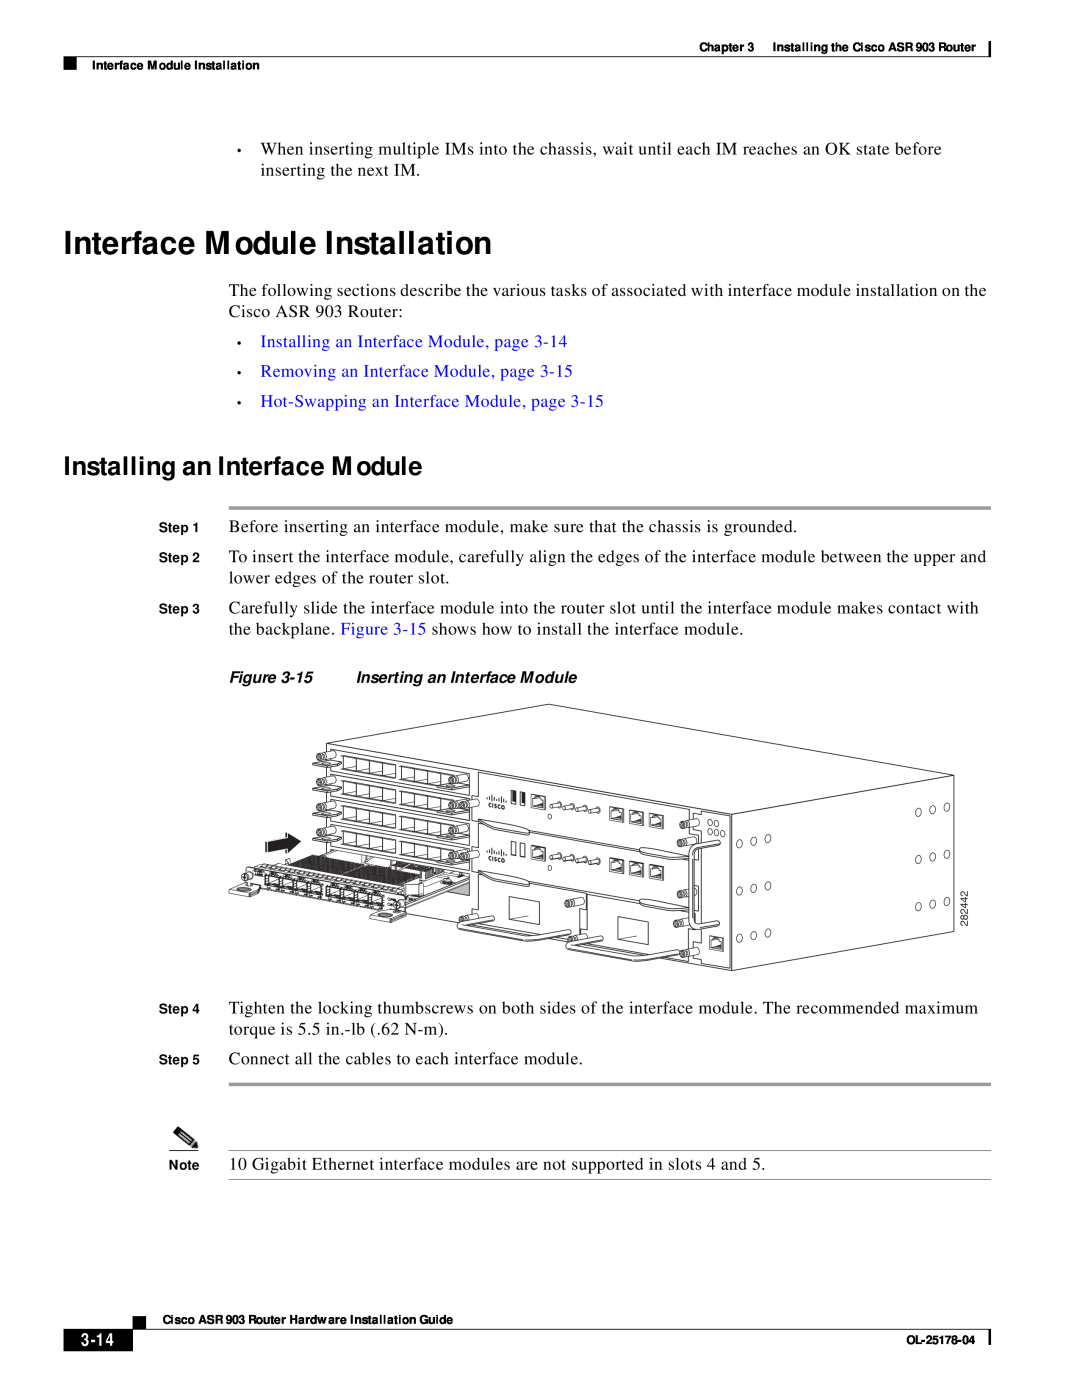 Cisco Systems ASR 903 manual Interface Module Installation, Installing an Interface Module, page, 3-14 